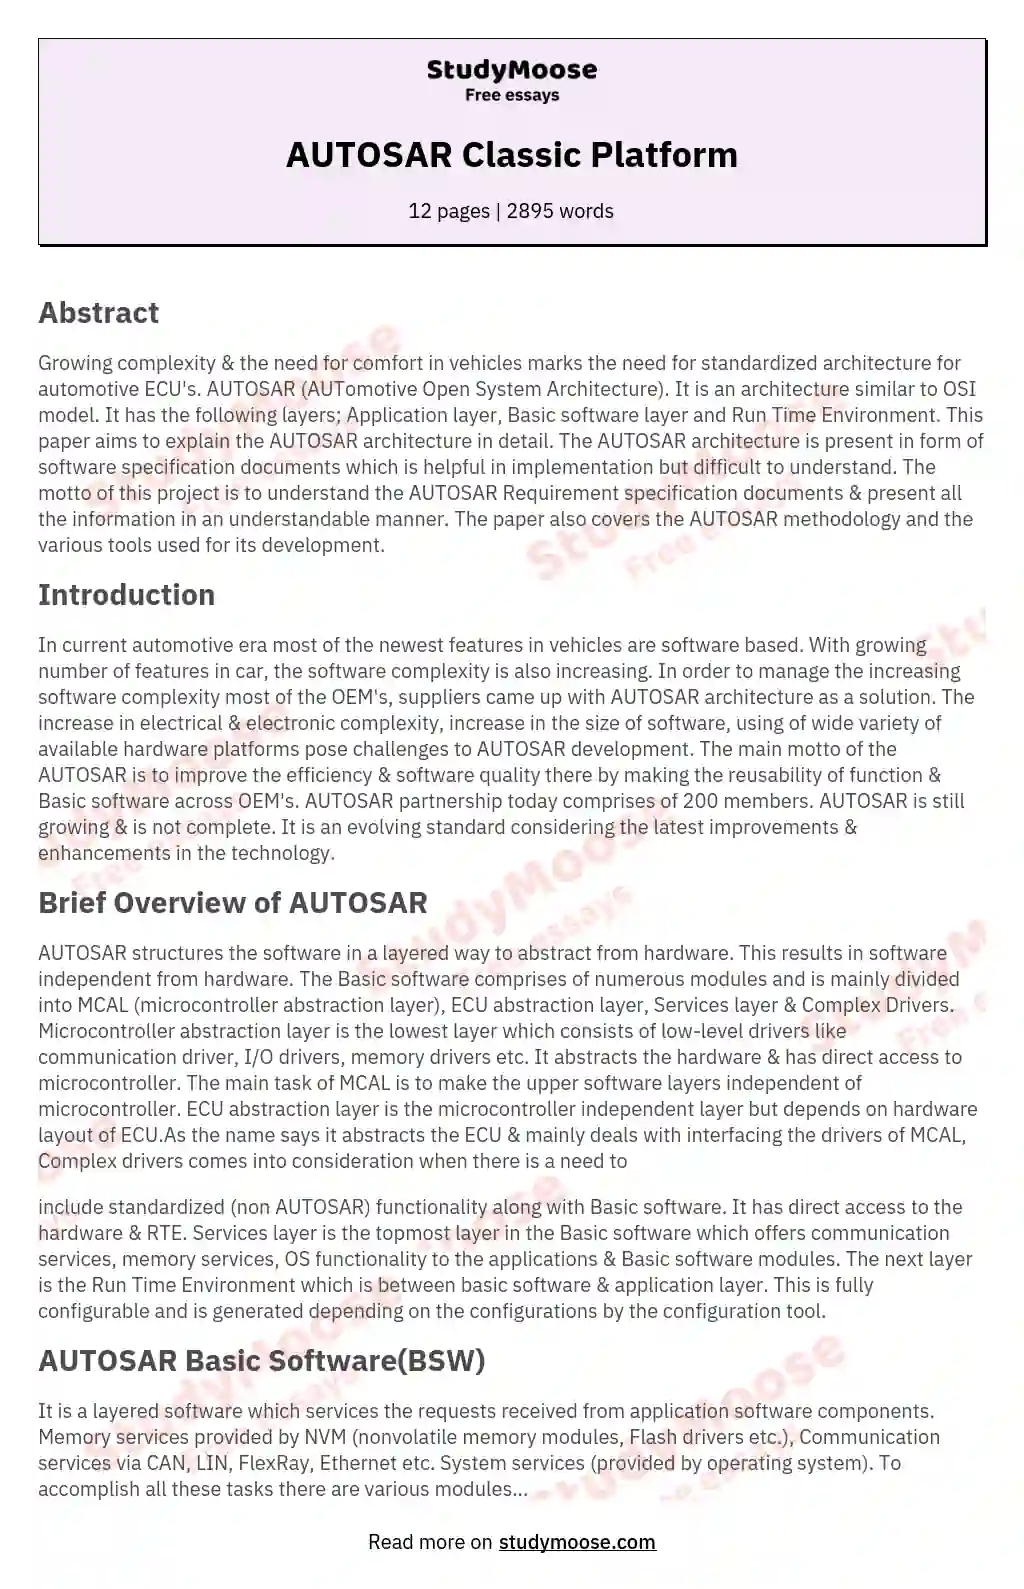 AUTOSAR Classic Platform essay